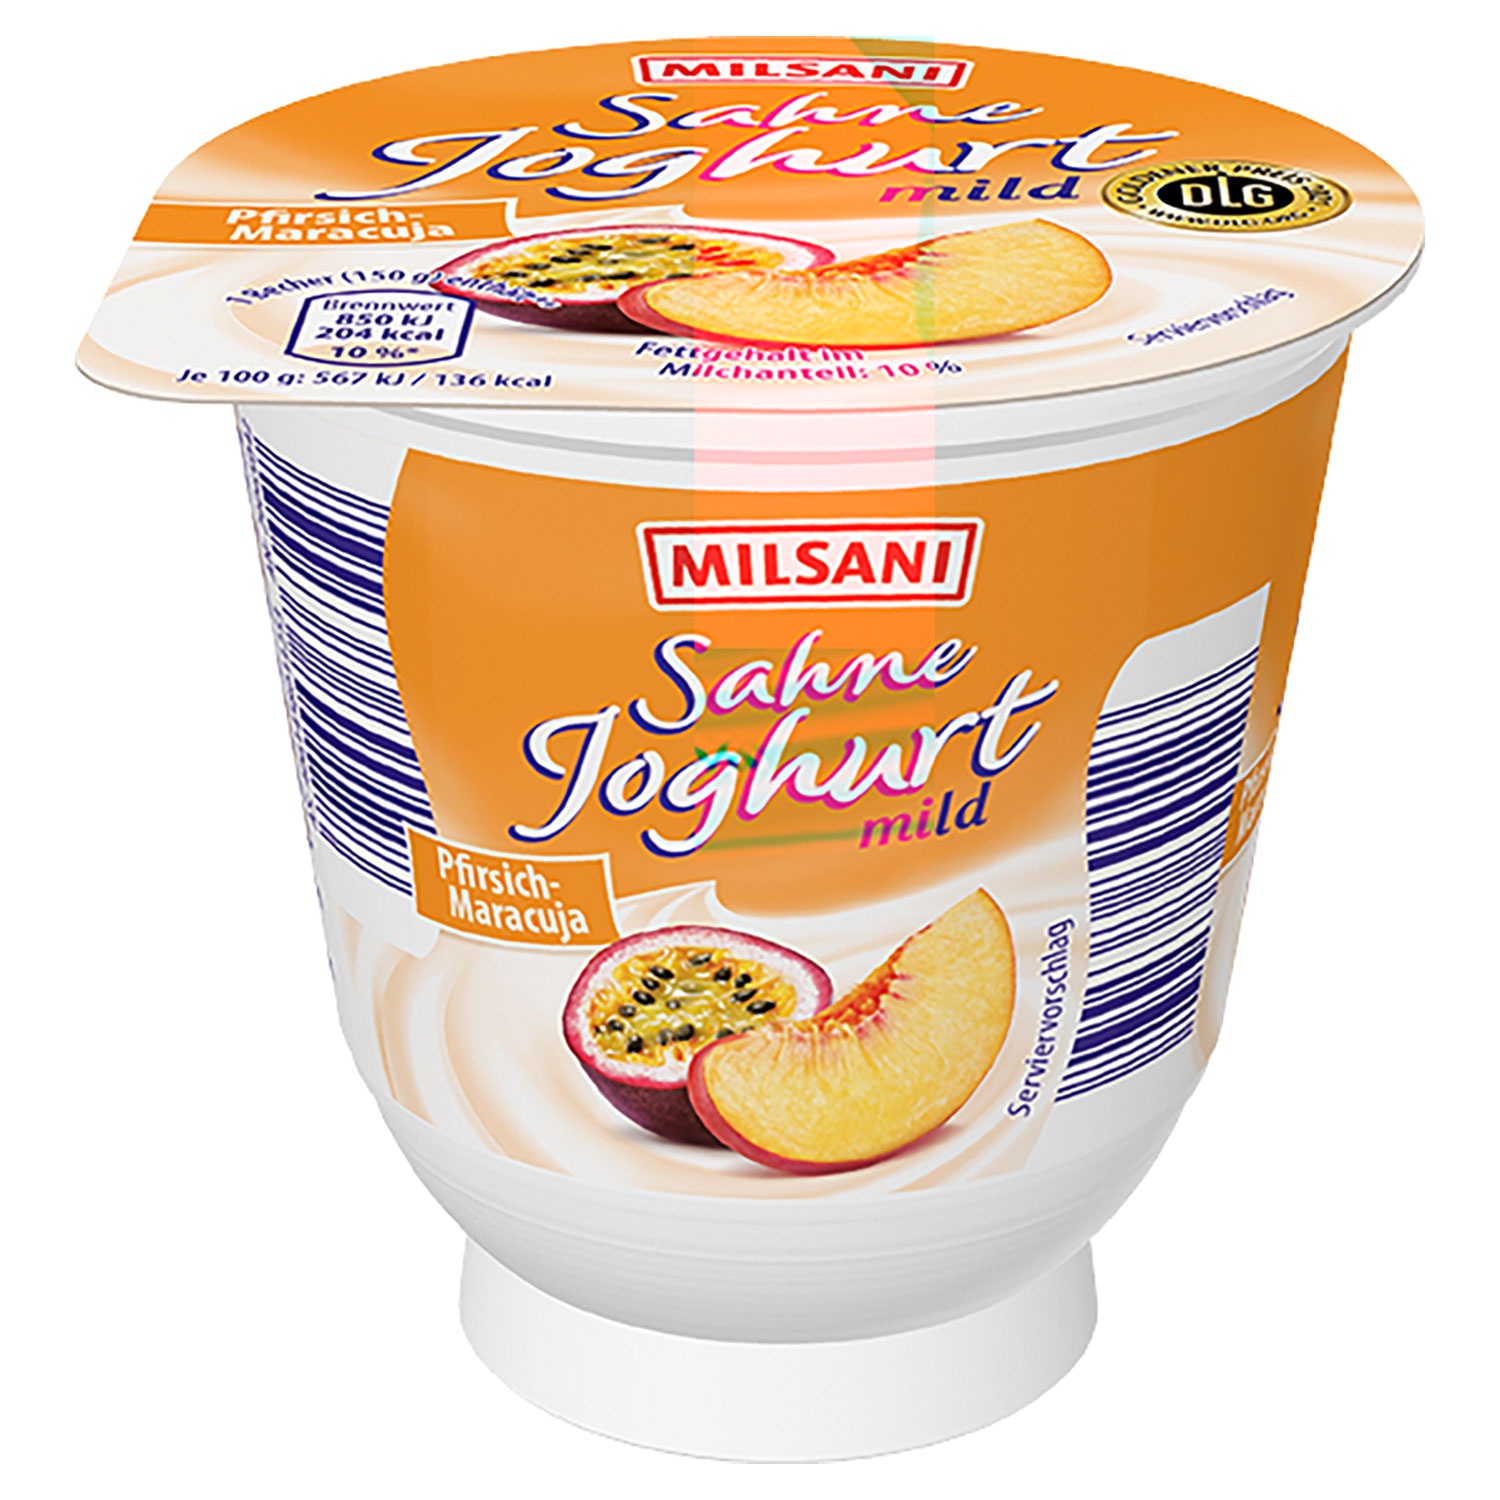 MILSANI Sahnejoghurt 150 g, Pfirsisch-Maracuja